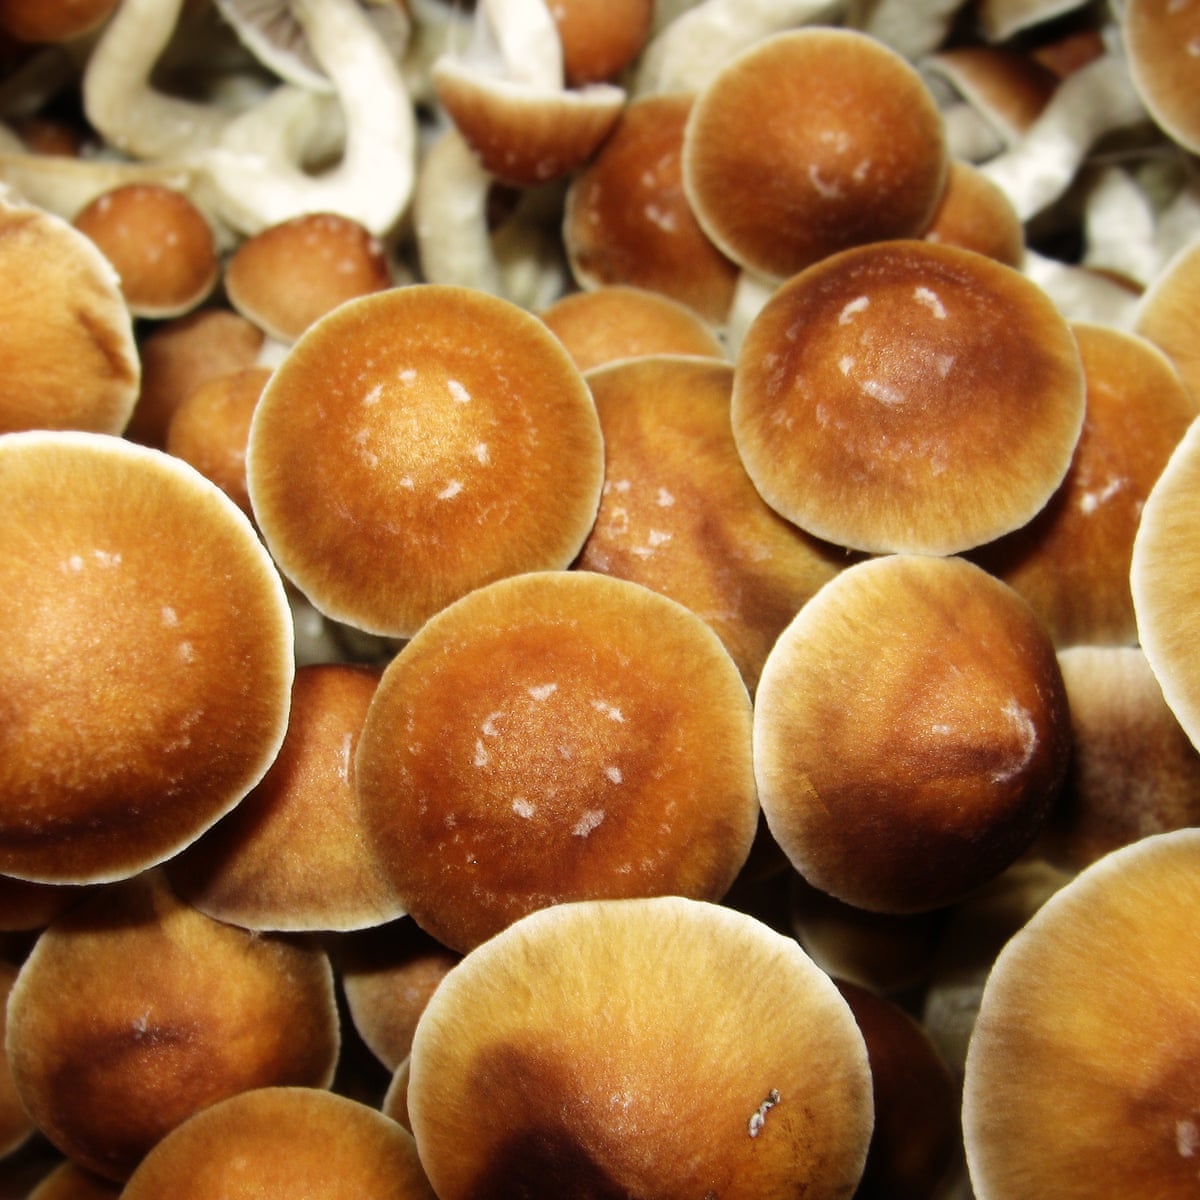 Study finds mushrooms are the safest recreational drug